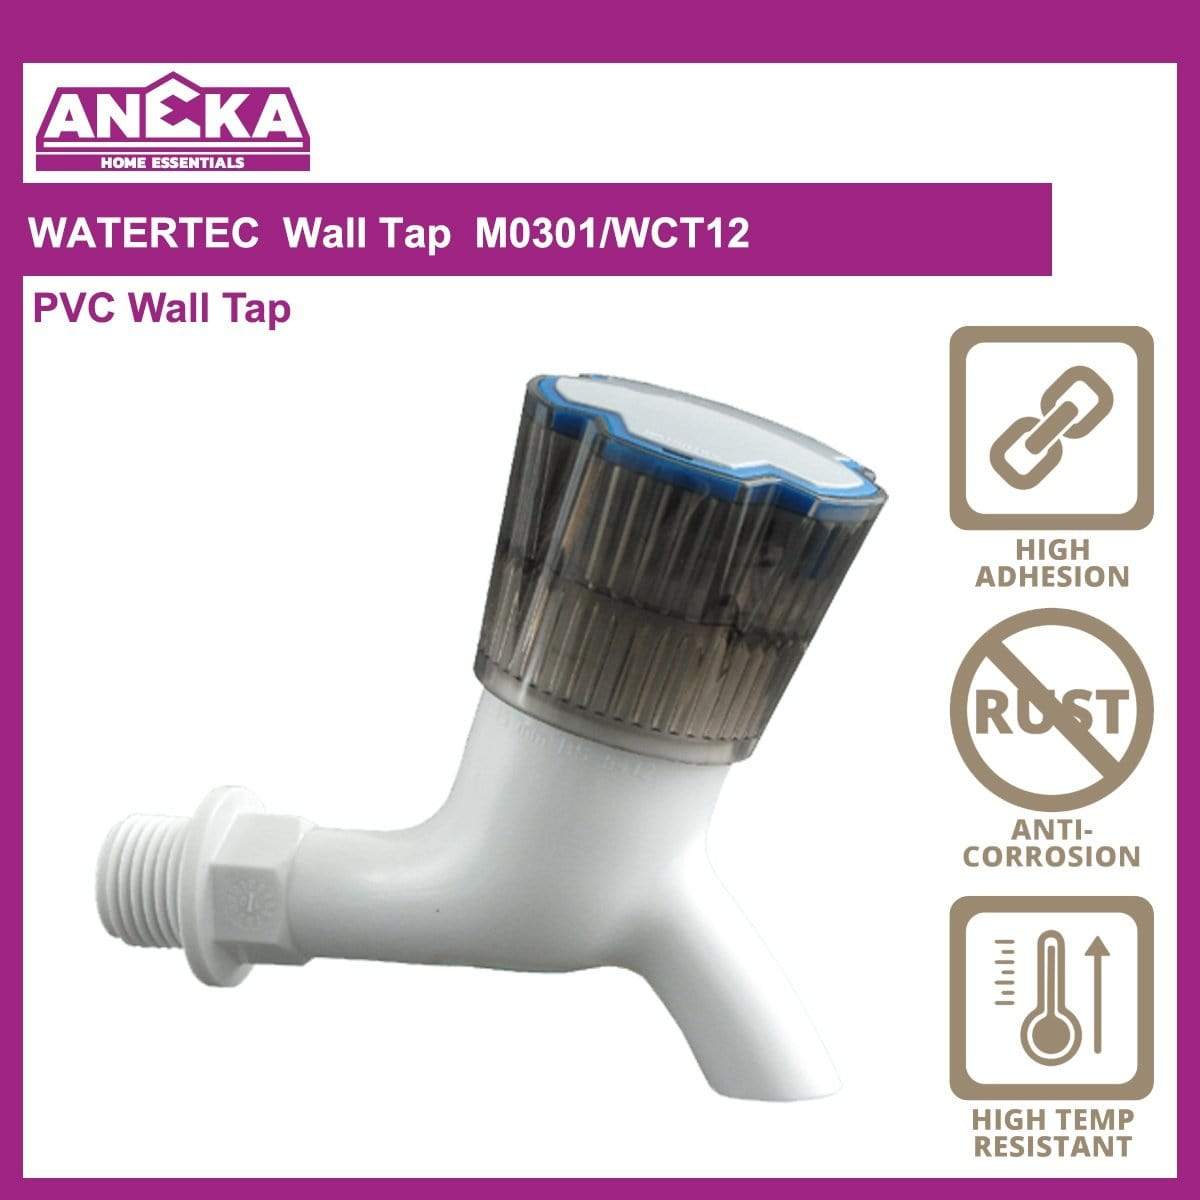 WATERTEC Wall Tap M0301/WCT12